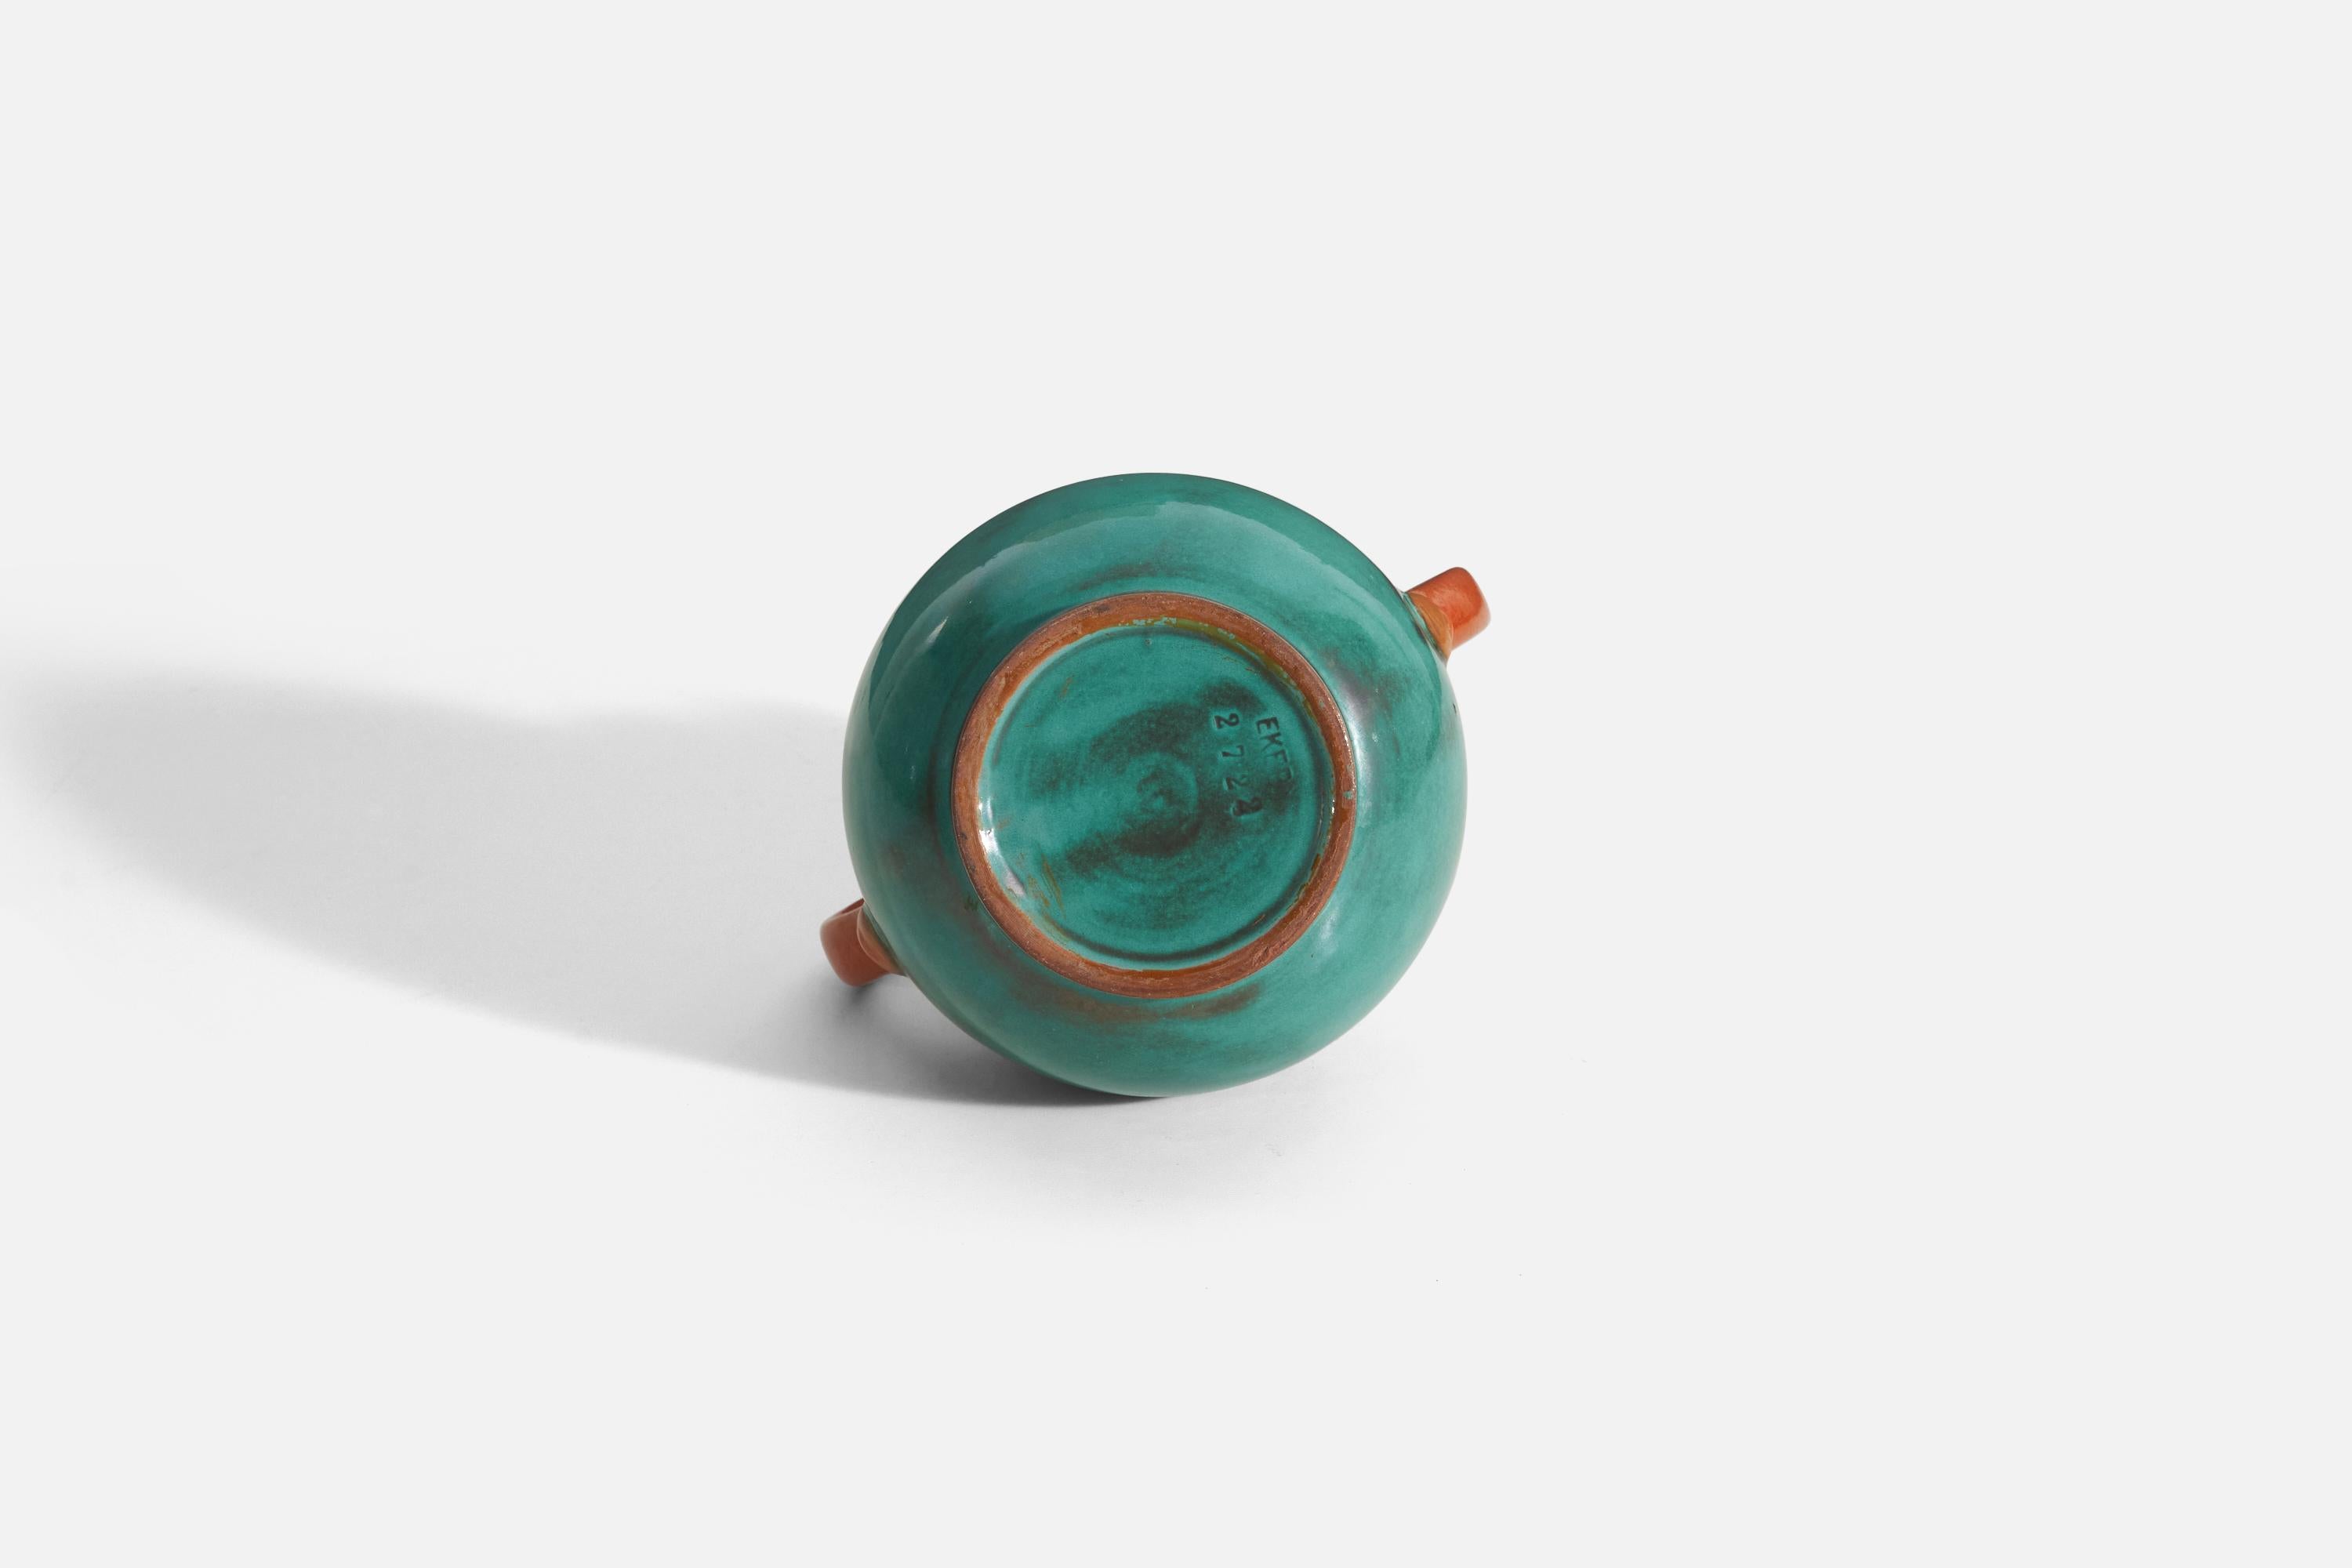 Mid-20th Century Upsala-Ekeby, Vase, Green and Orange-Glazed Earthenware, Sweden, 1940s For Sale